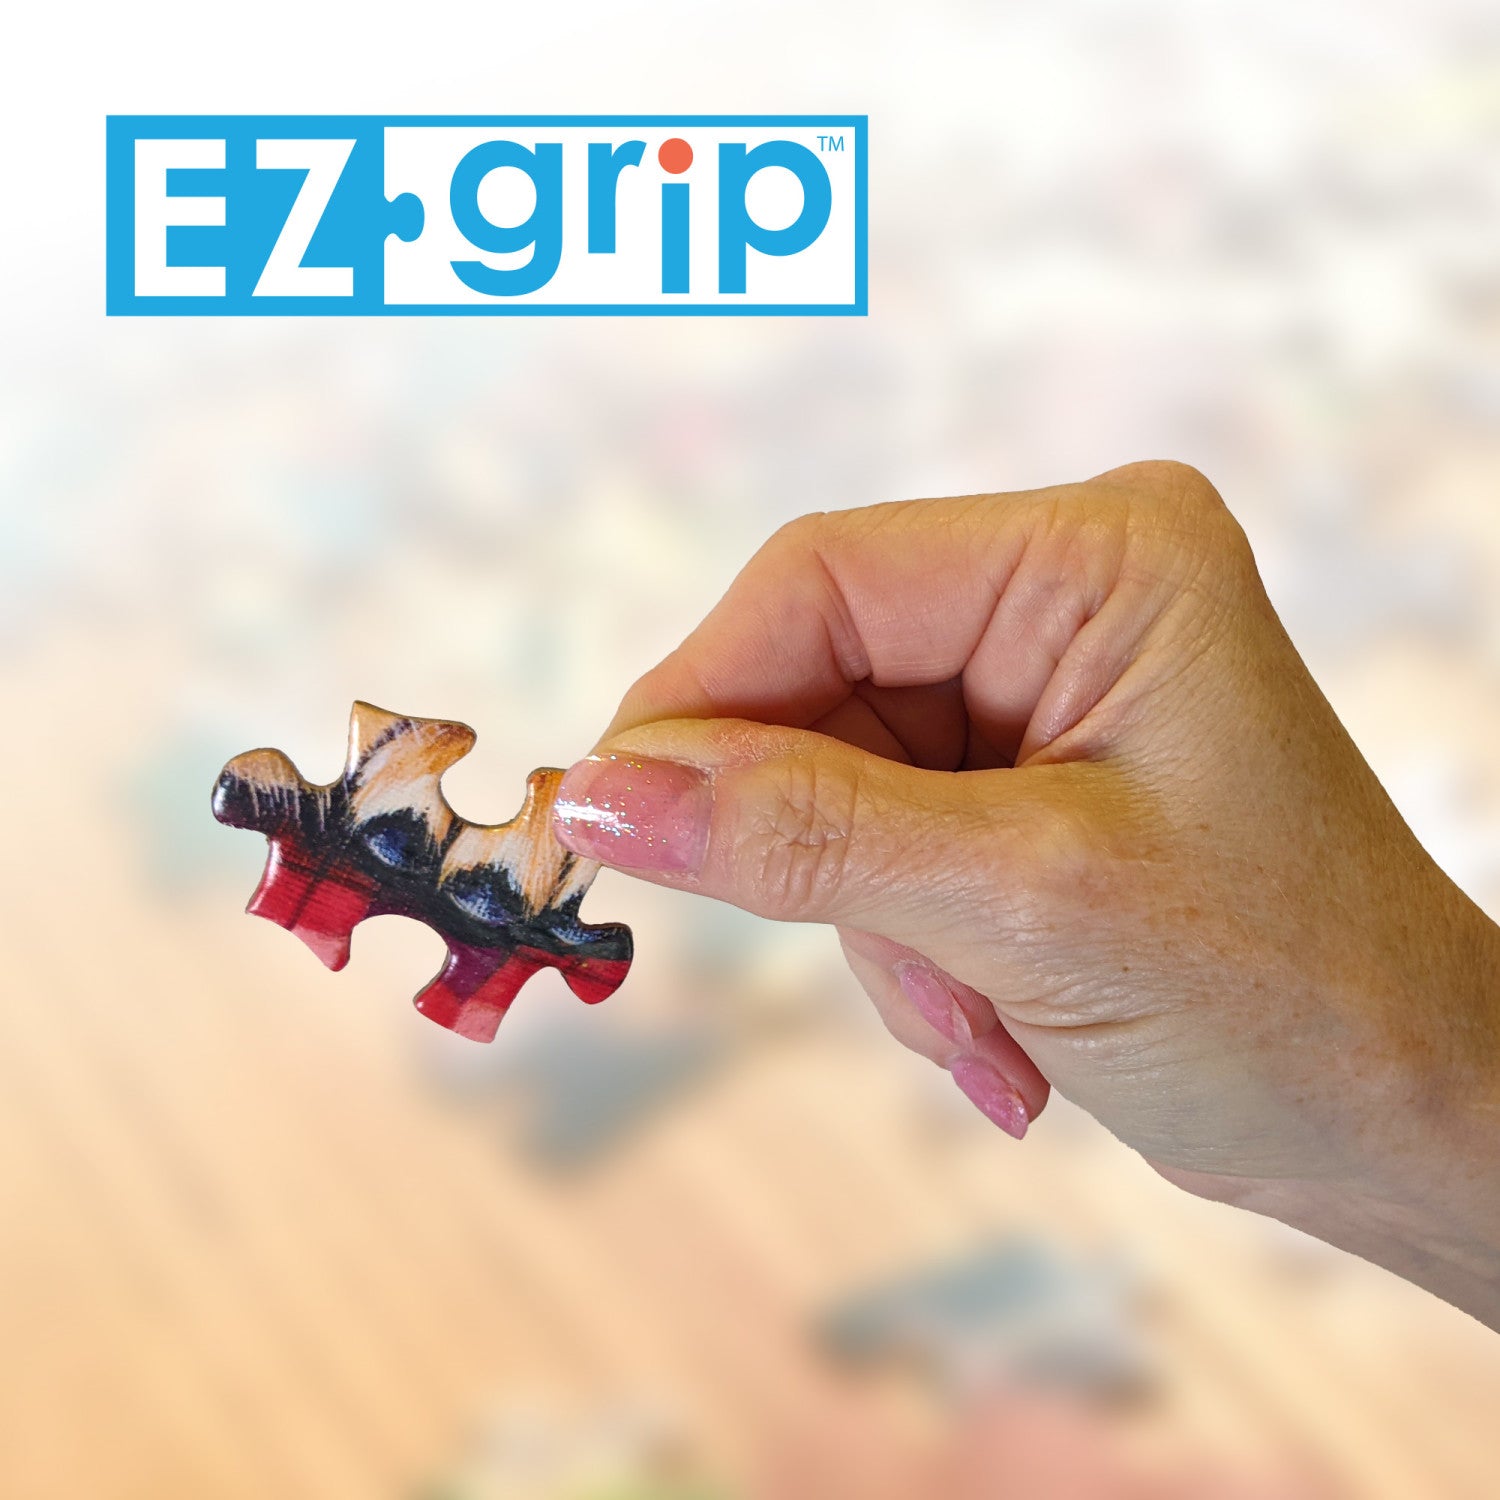 Playful Paws - Washing Time 300 Piece EZ Grip Puzzle